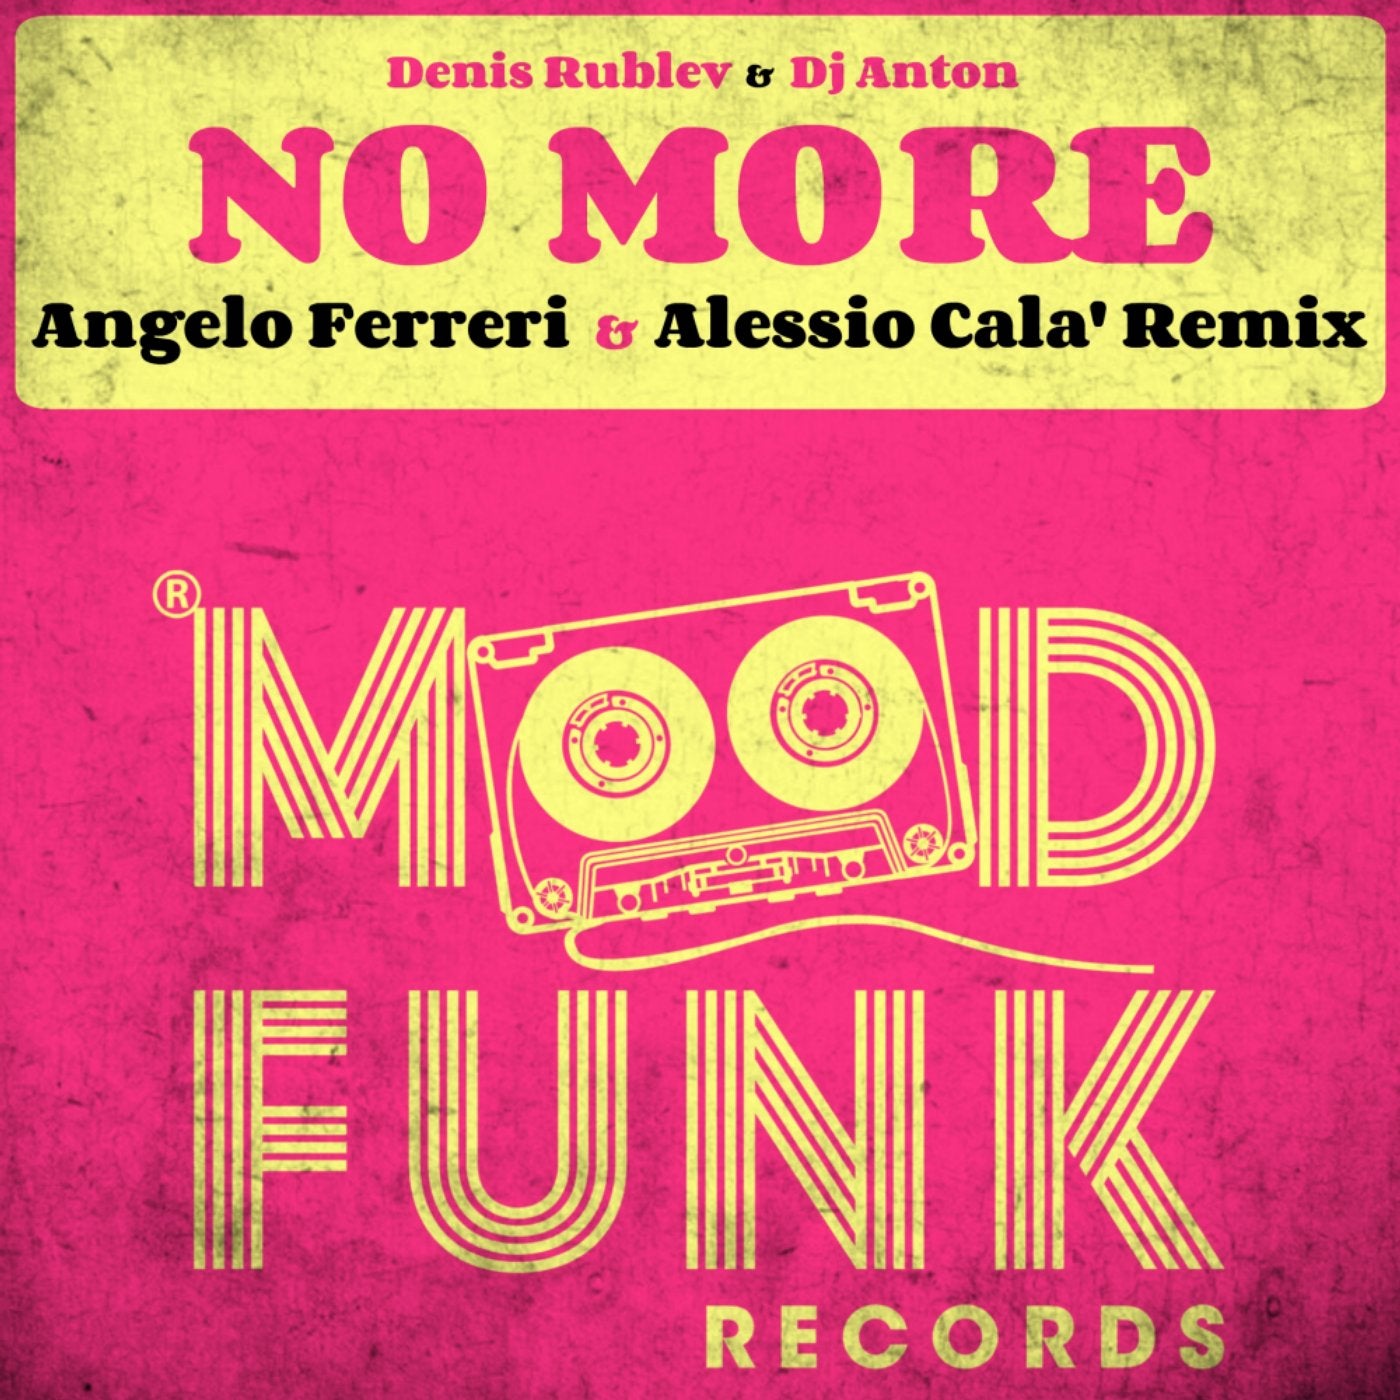 No More (Angelo Ferreri & Alessio Cala' Remix)